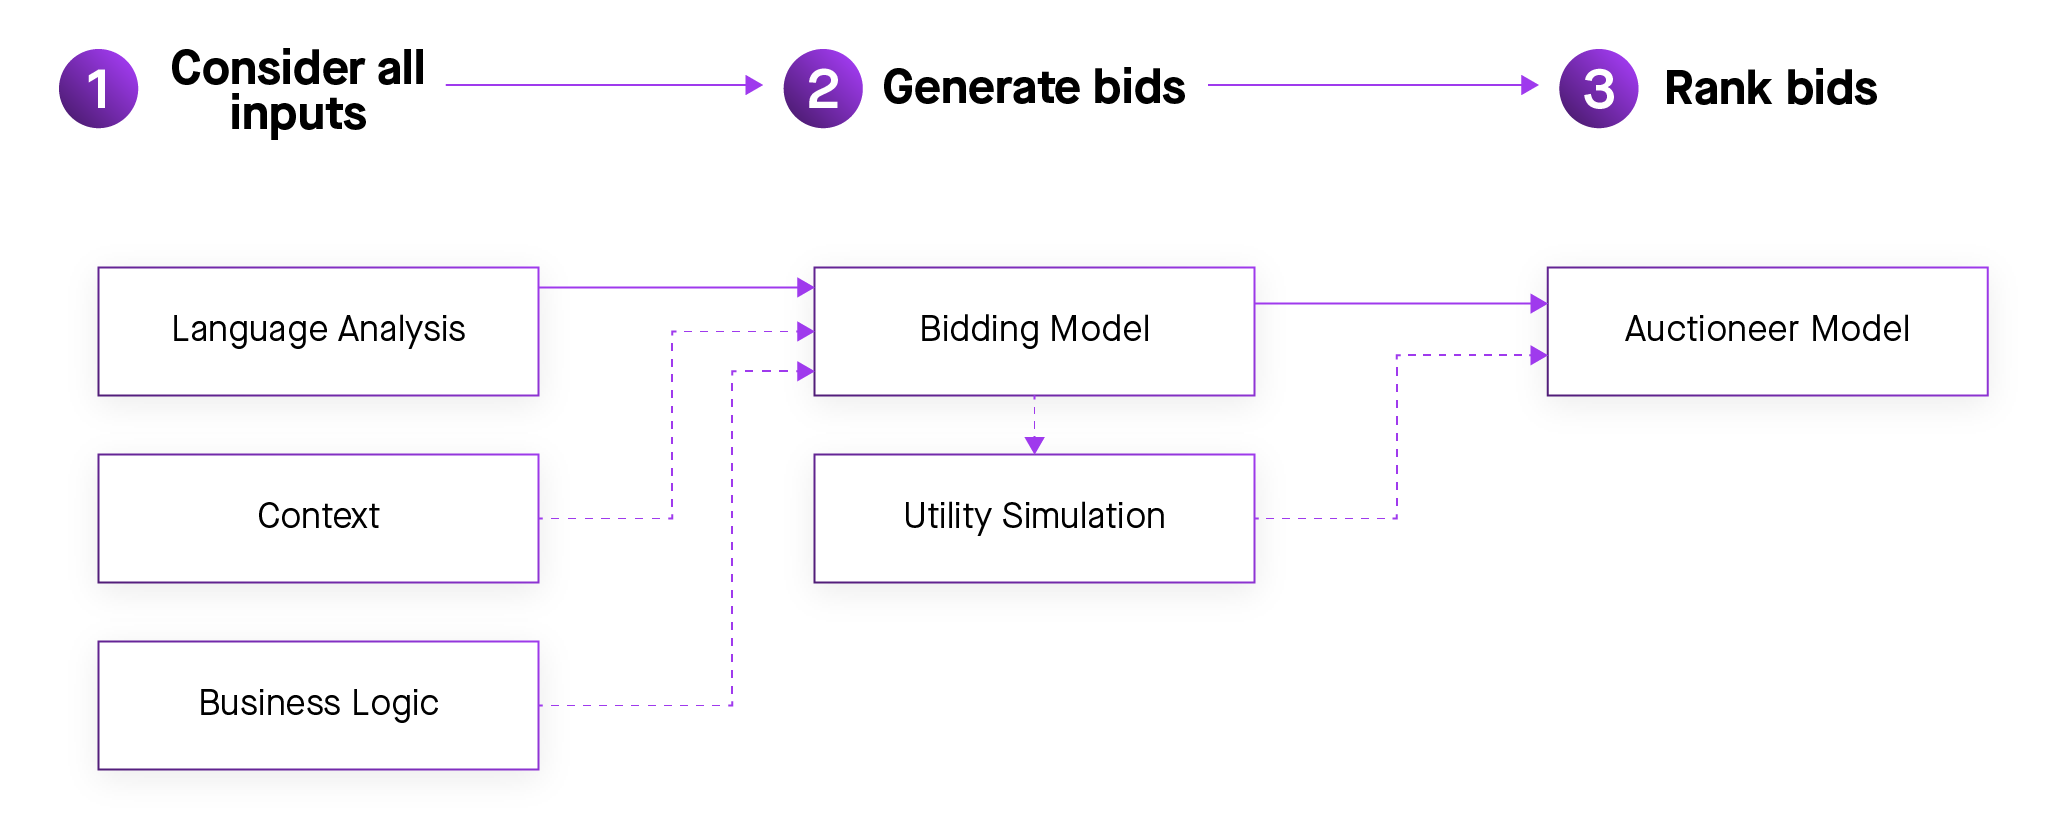 making decisions based on models